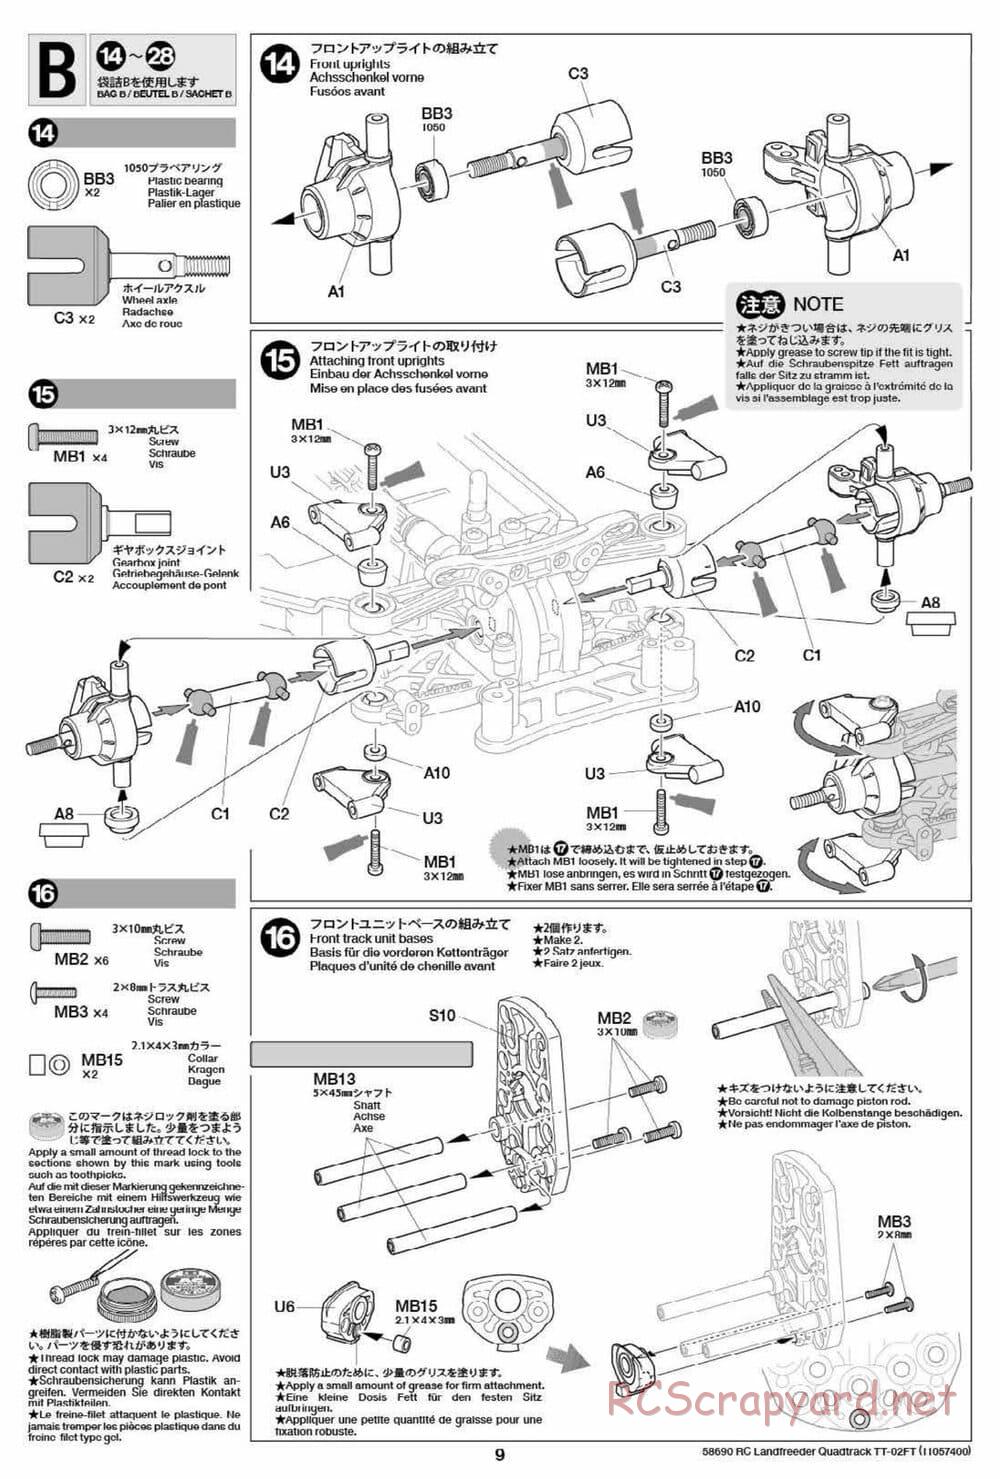 Tamiya - Landfreeder Quadtrack - TT-02FT Chassis - Manual - Page 9